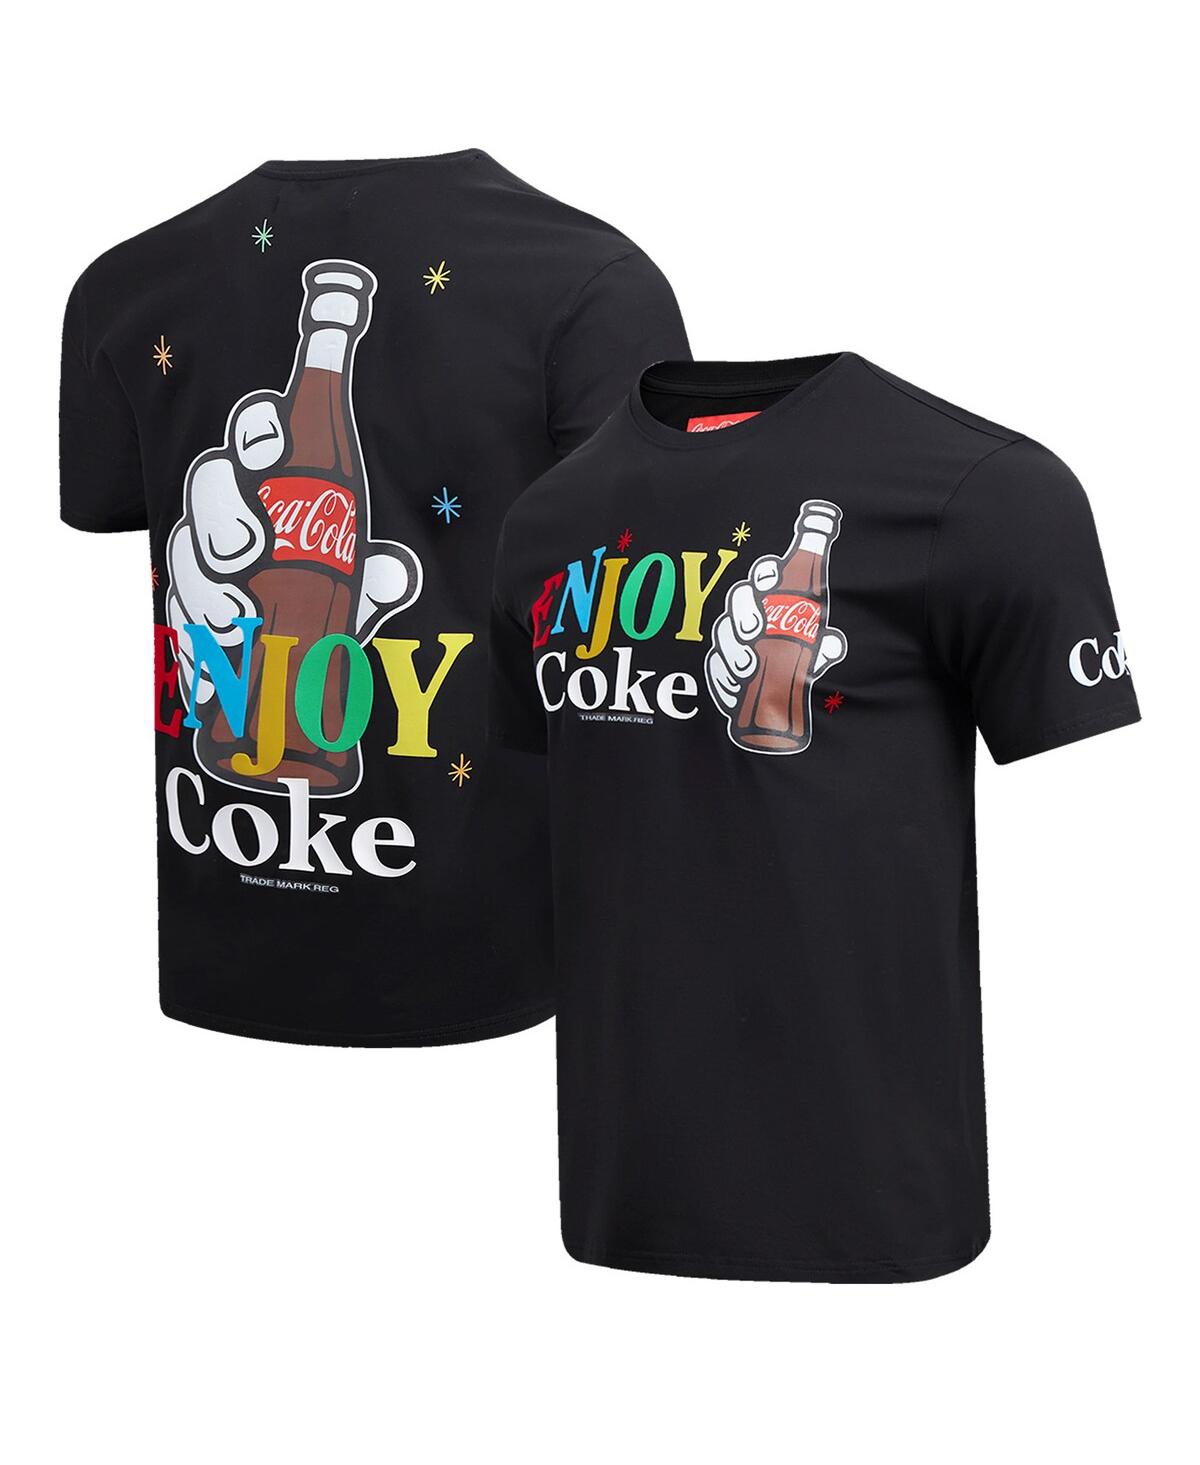 Men's Black Coca-Cola Enjoy Coke T-Shirt - Black